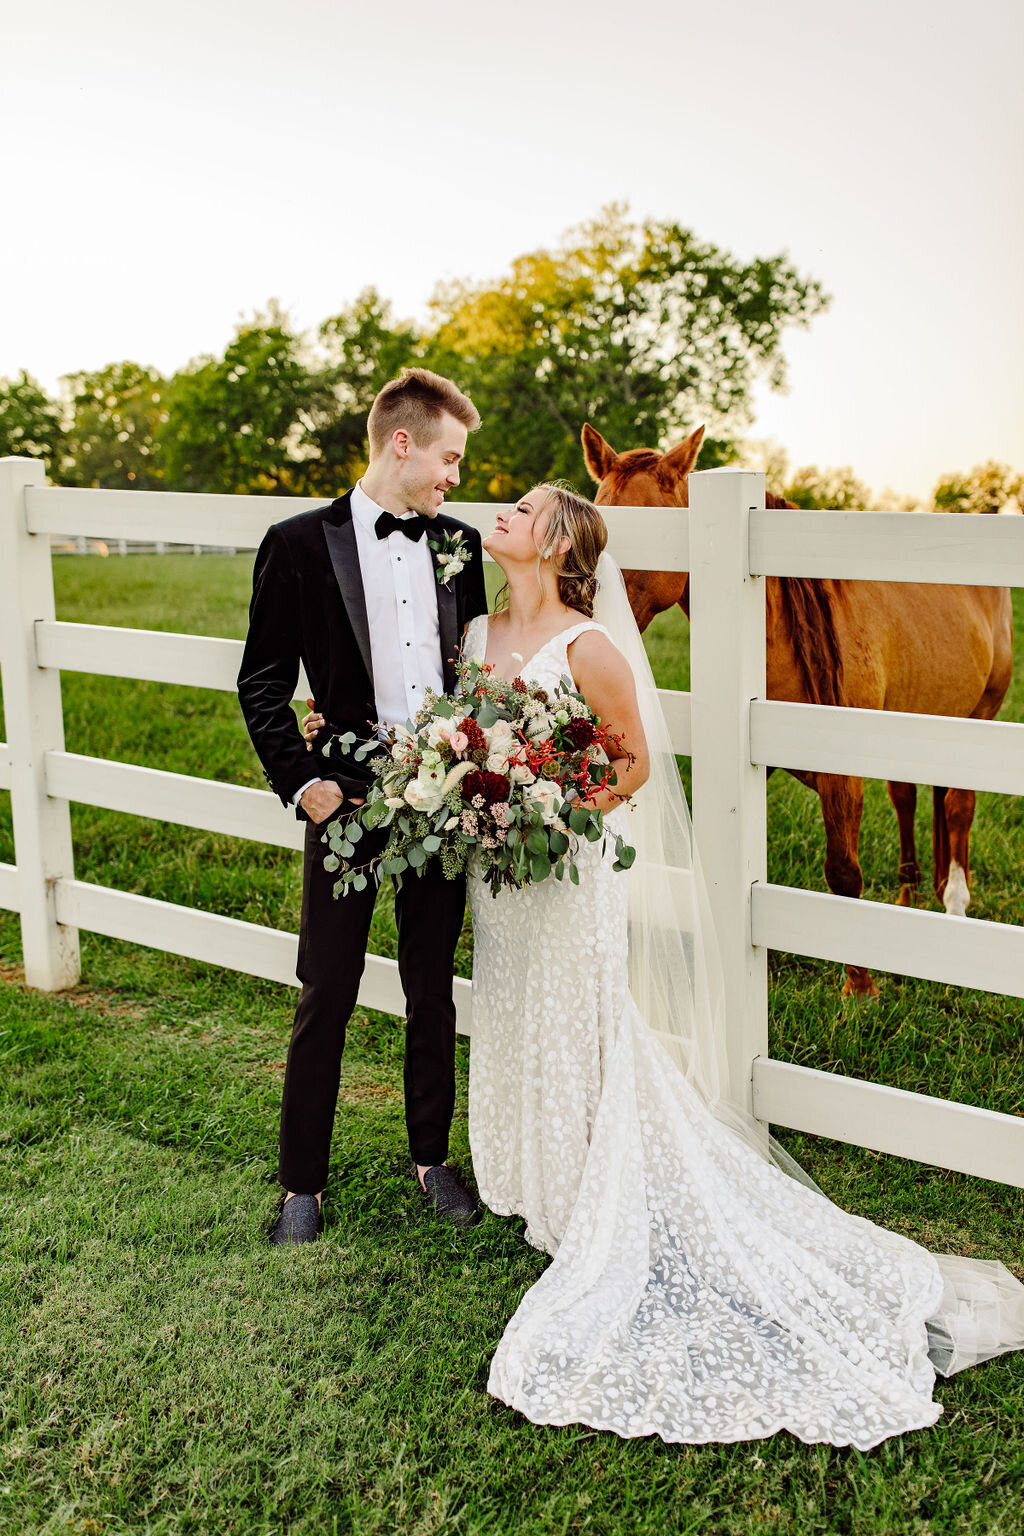 ACGoodman_Photography_Chelsea_Landon_Wedding_Marblegate_Farm_Knoxville_Tennessee-1179